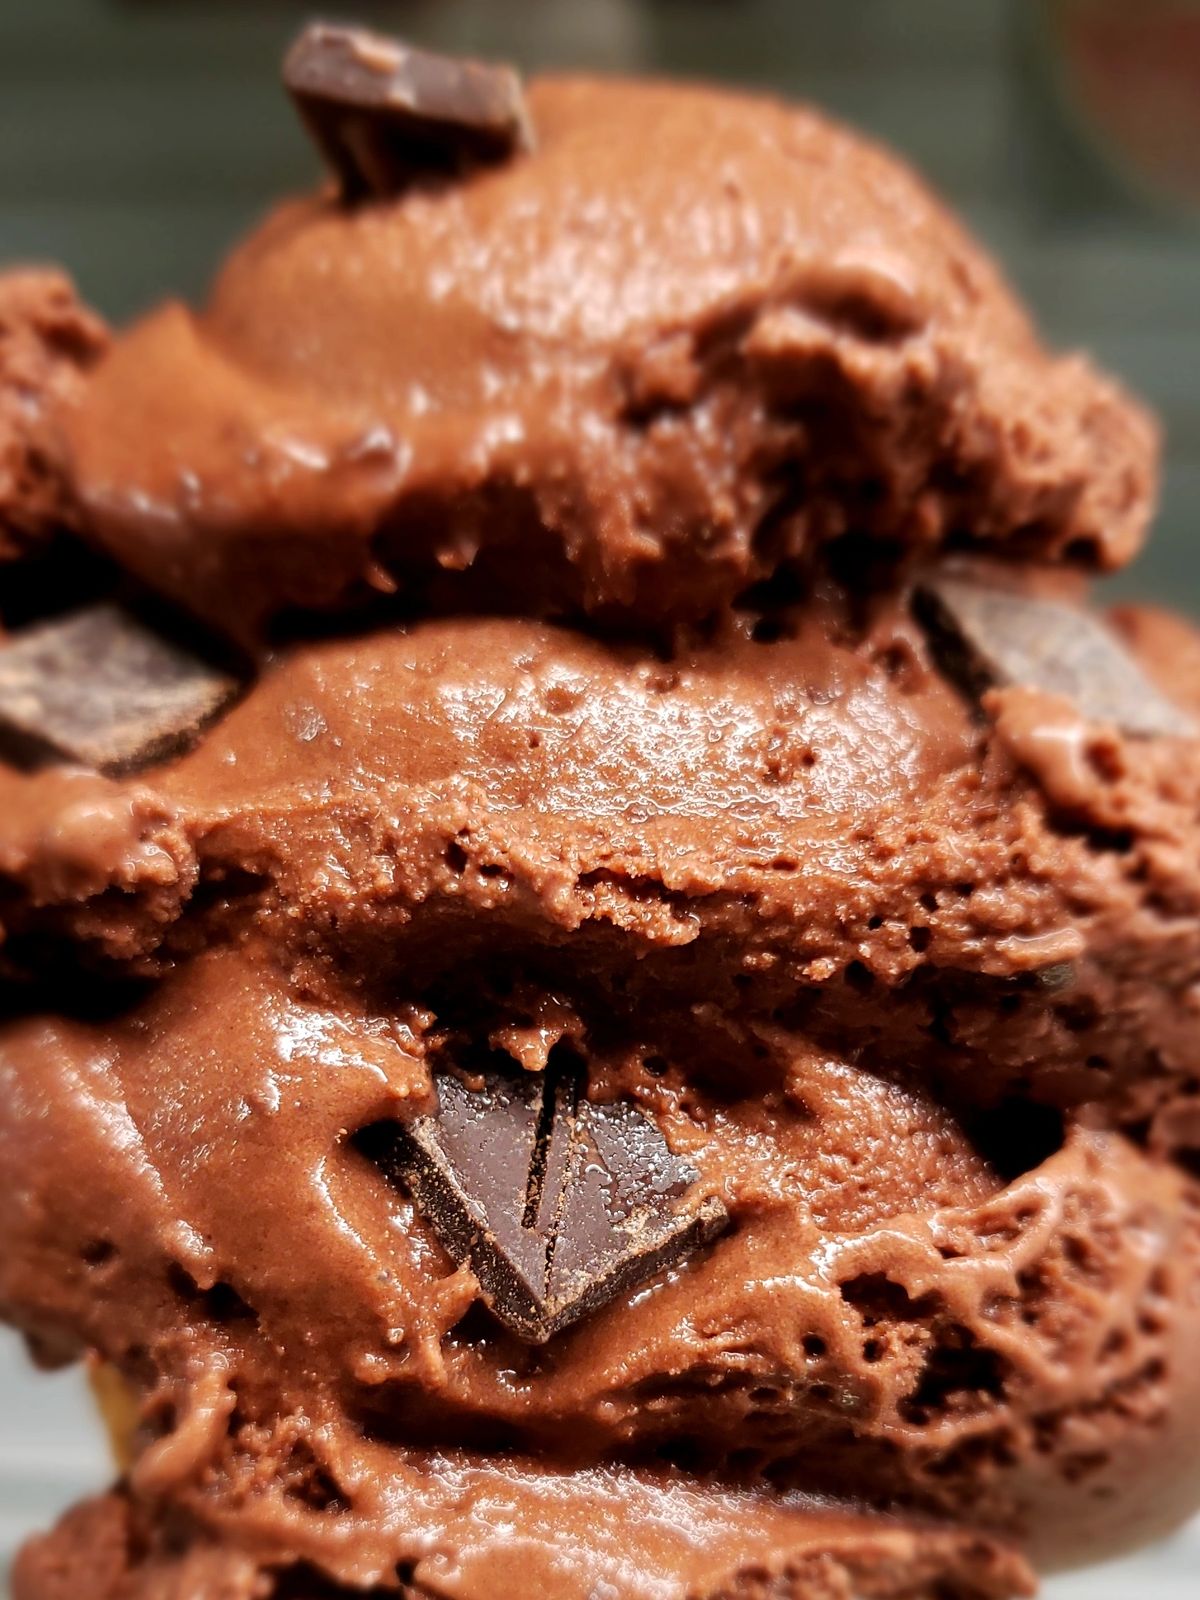 Homemade triple chocolate gelato